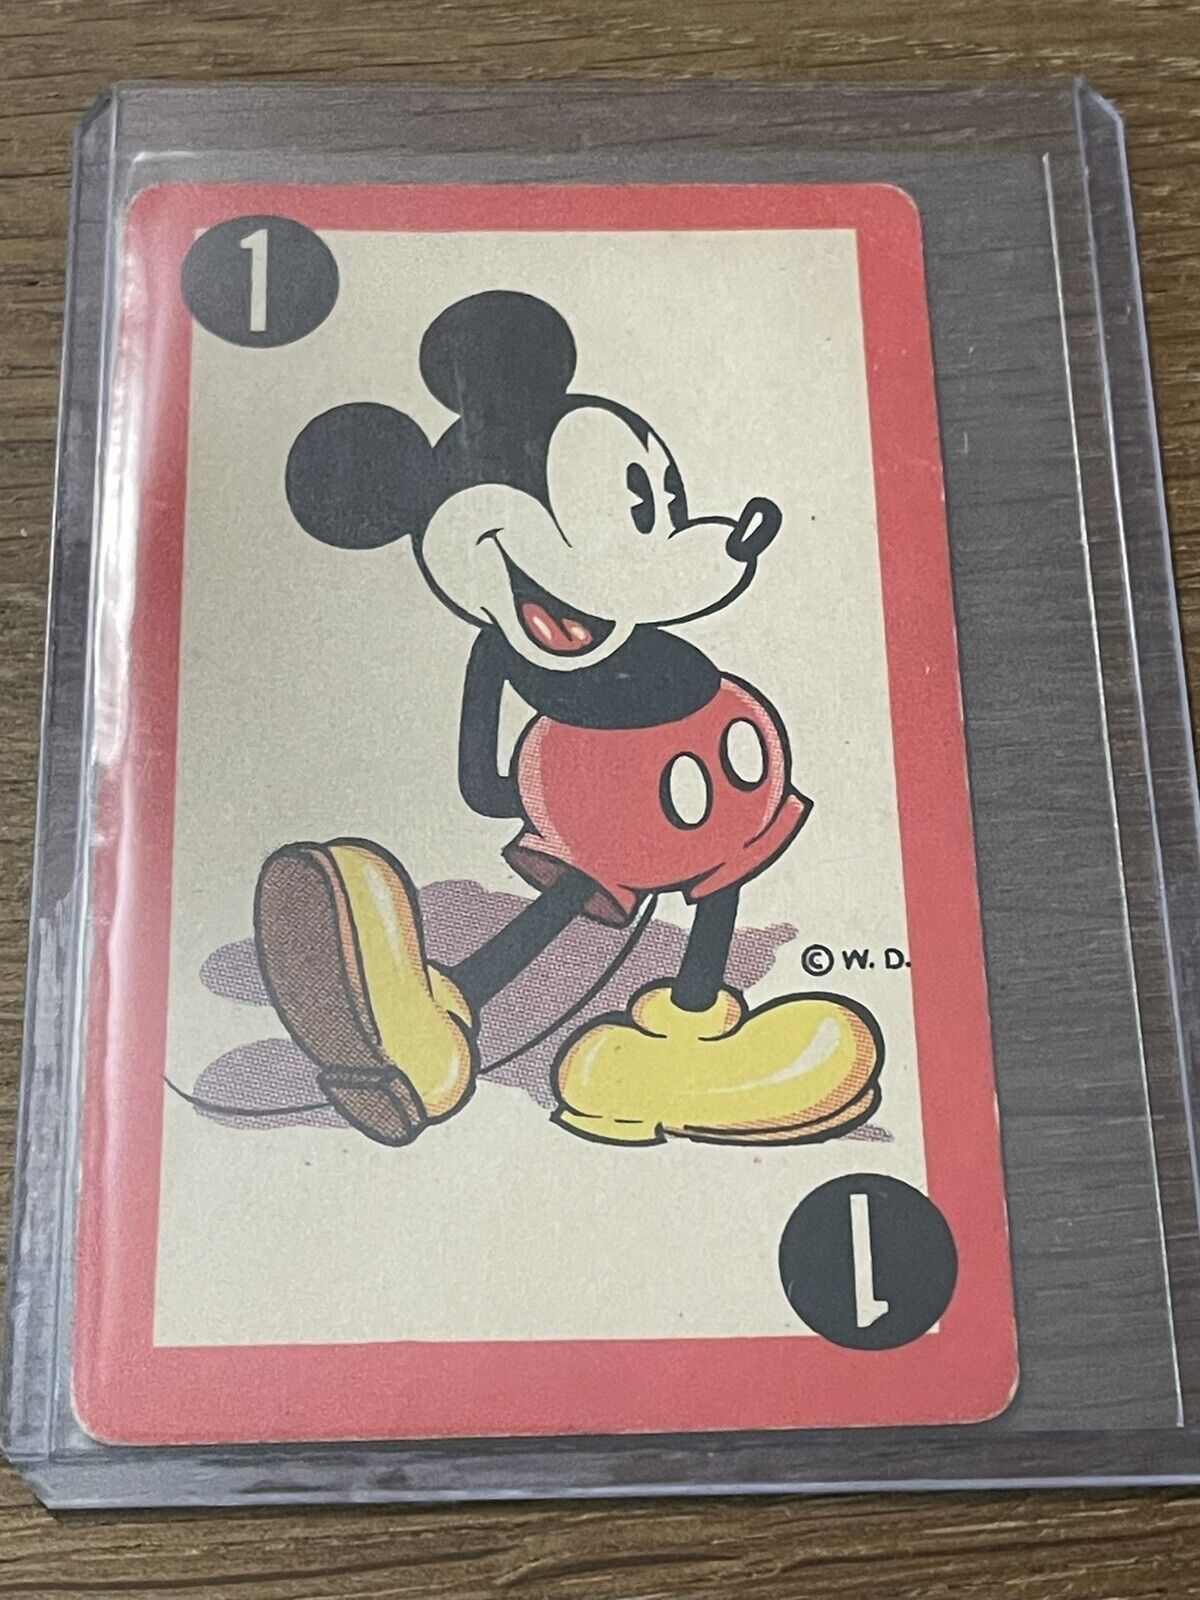 1941 WALT DISNEY WHITMAN MICKEY MOUSE OLD MAID CARD GAME CARD RARE DISNEYANA